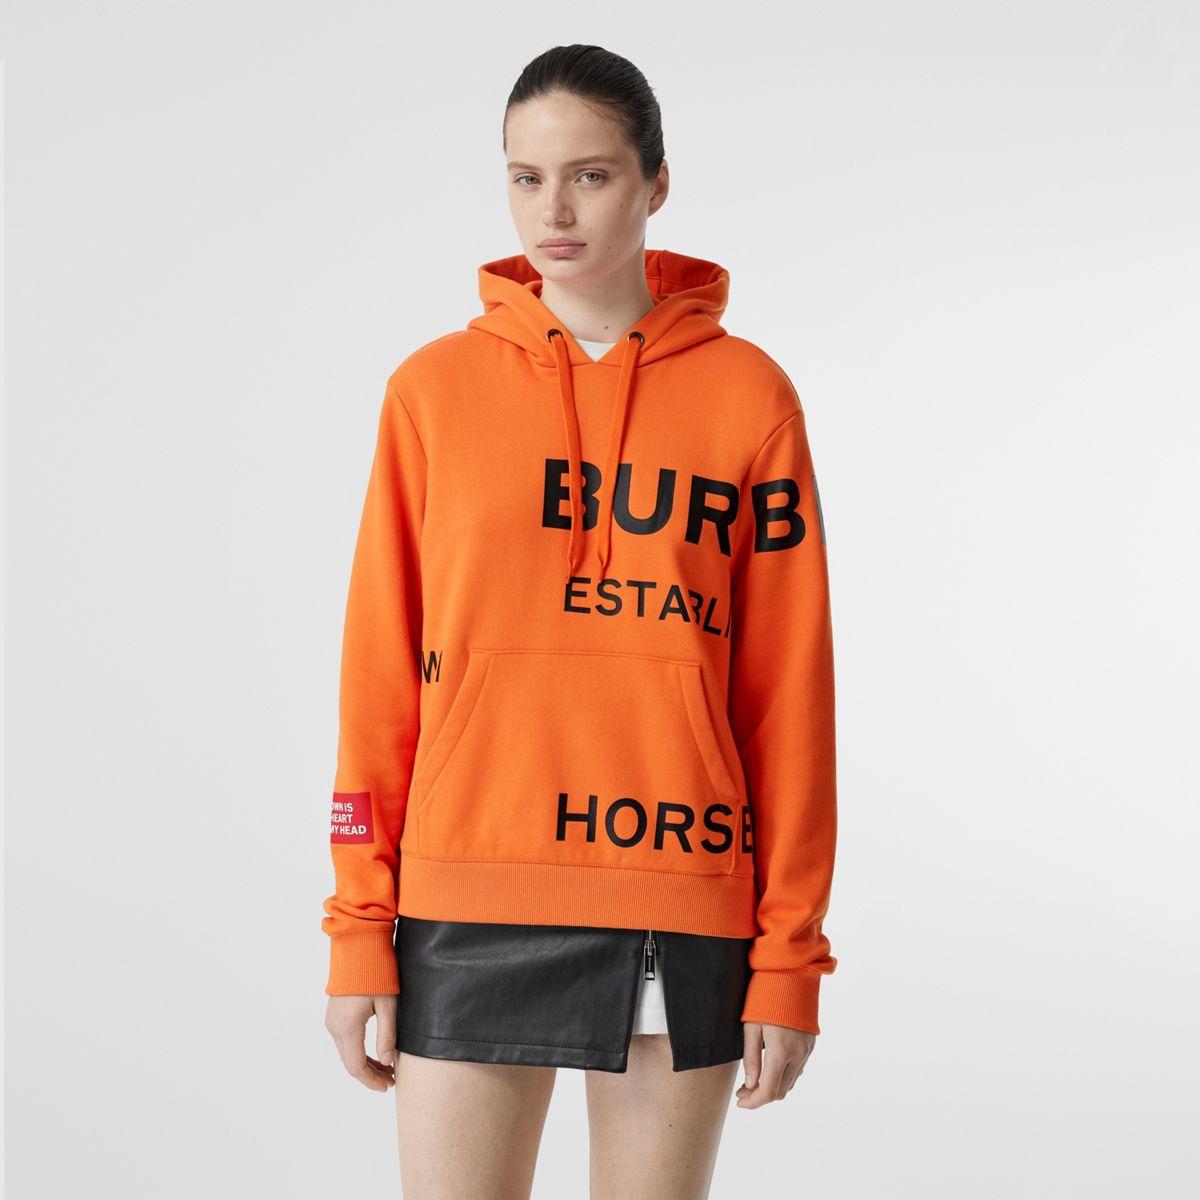 burberry orange sweatshirt